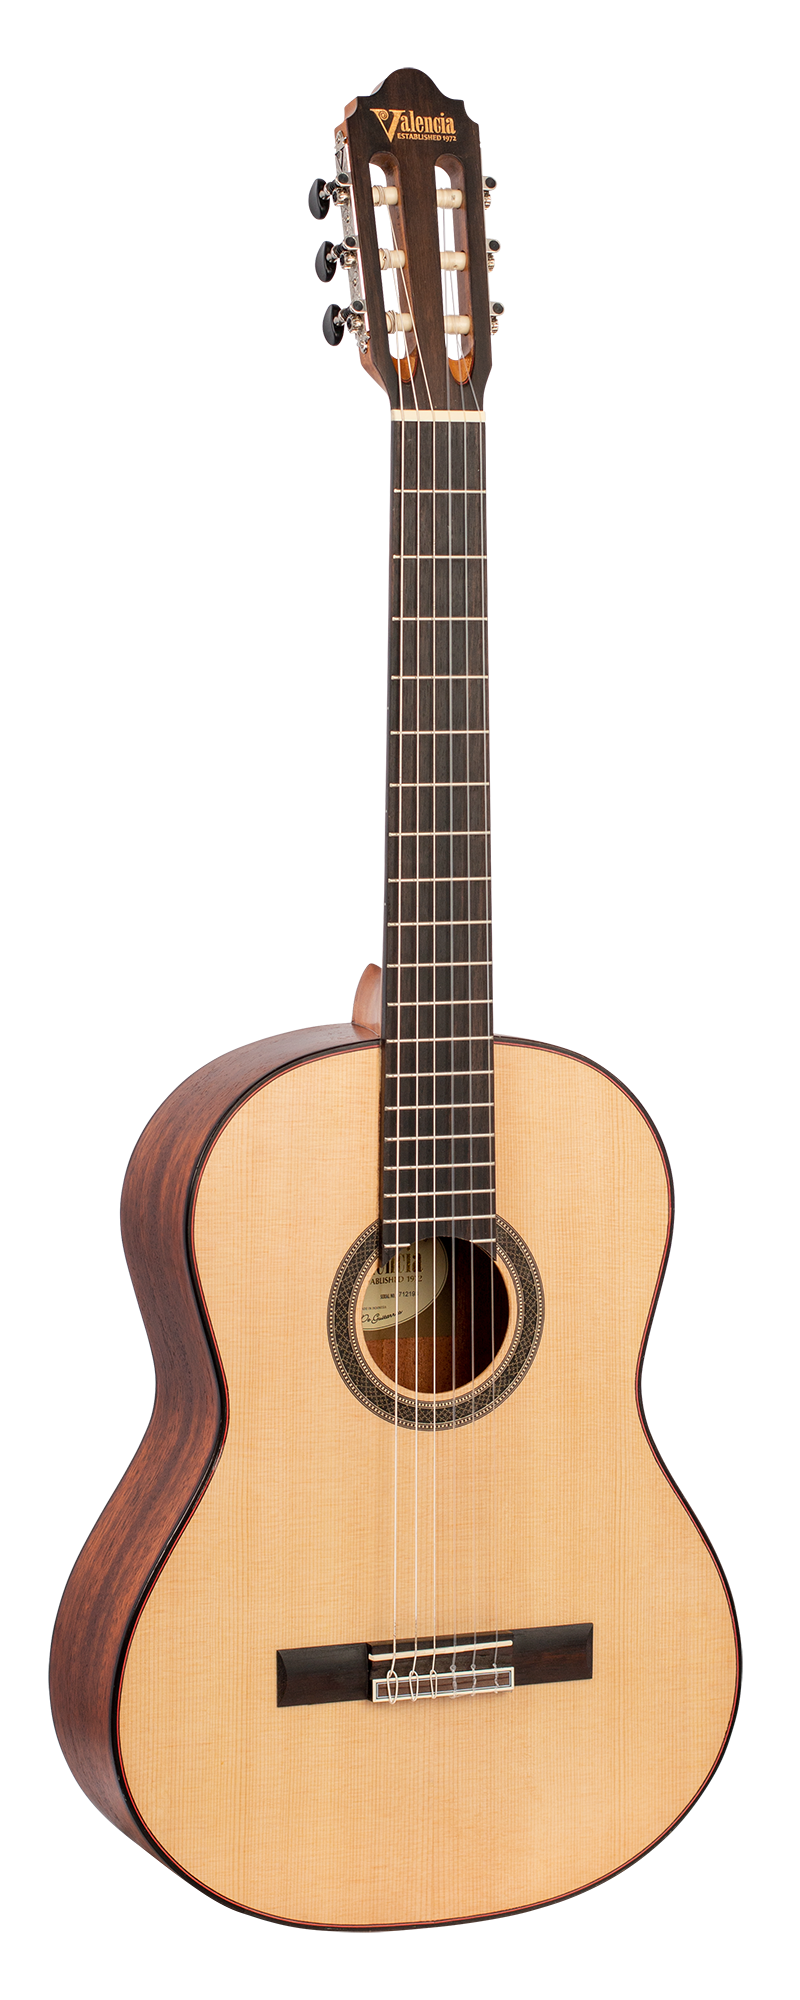 700 Series – Valencia Guitars